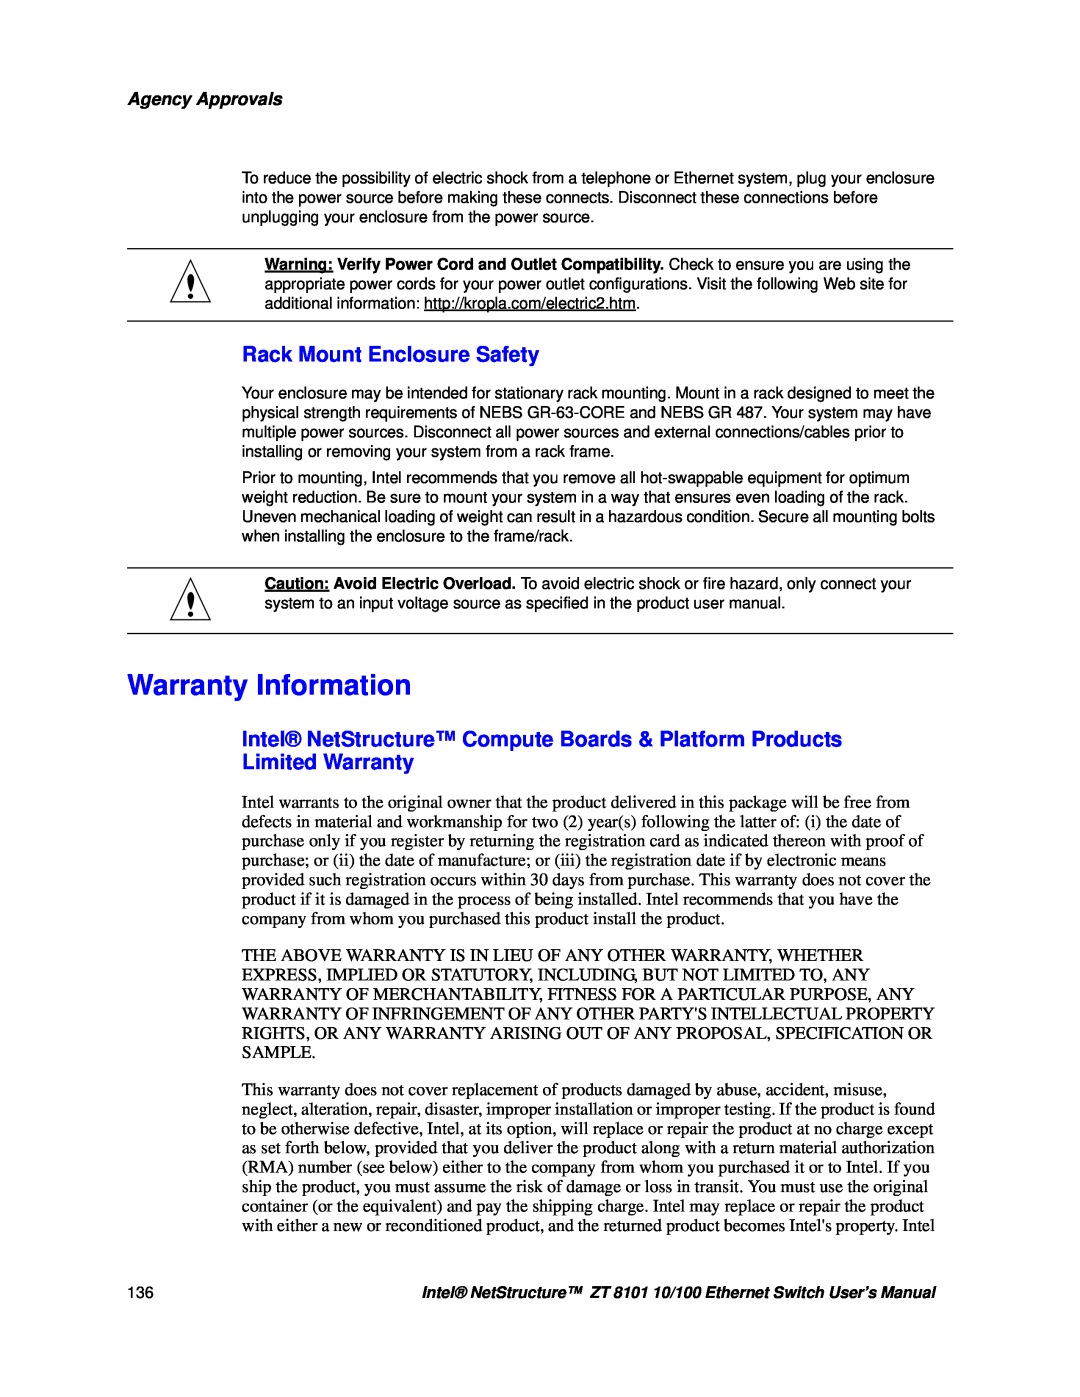 Intel ZT 8101 10/100 user manual Warranty Information, Rack Mount Enclosure Safety, Limited Warranty, Agency Approvals 